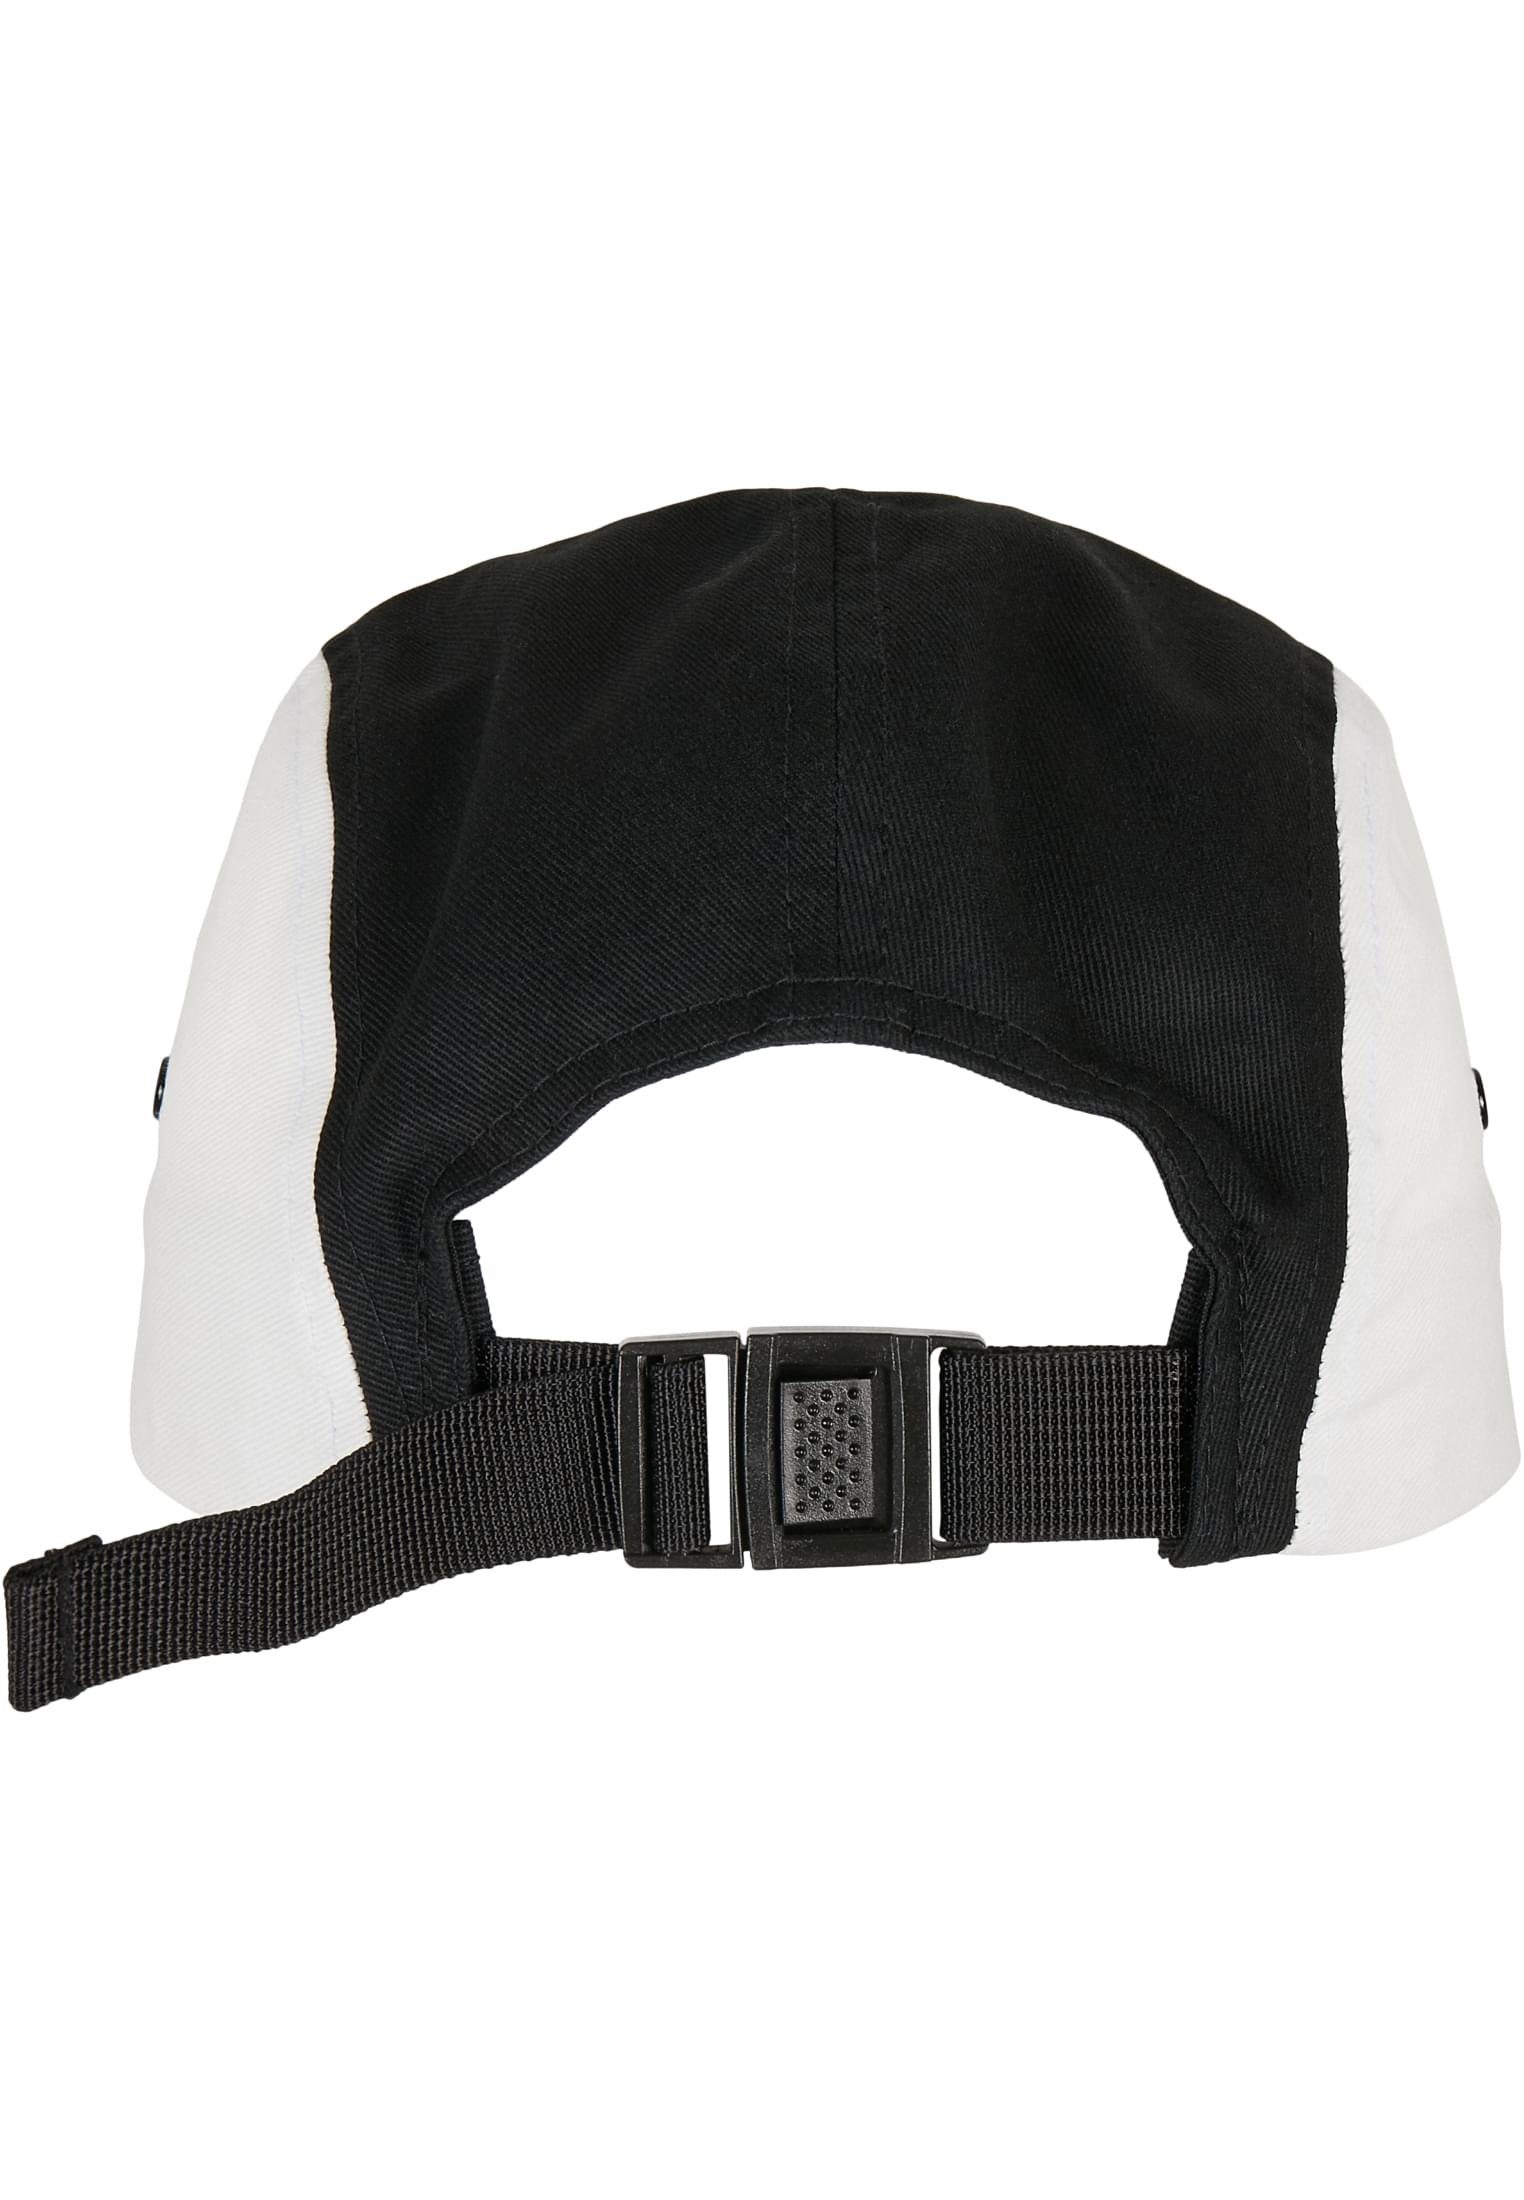 Cap black/white Black Fresh Snapback Label Starter Accessoires Jockey Cap